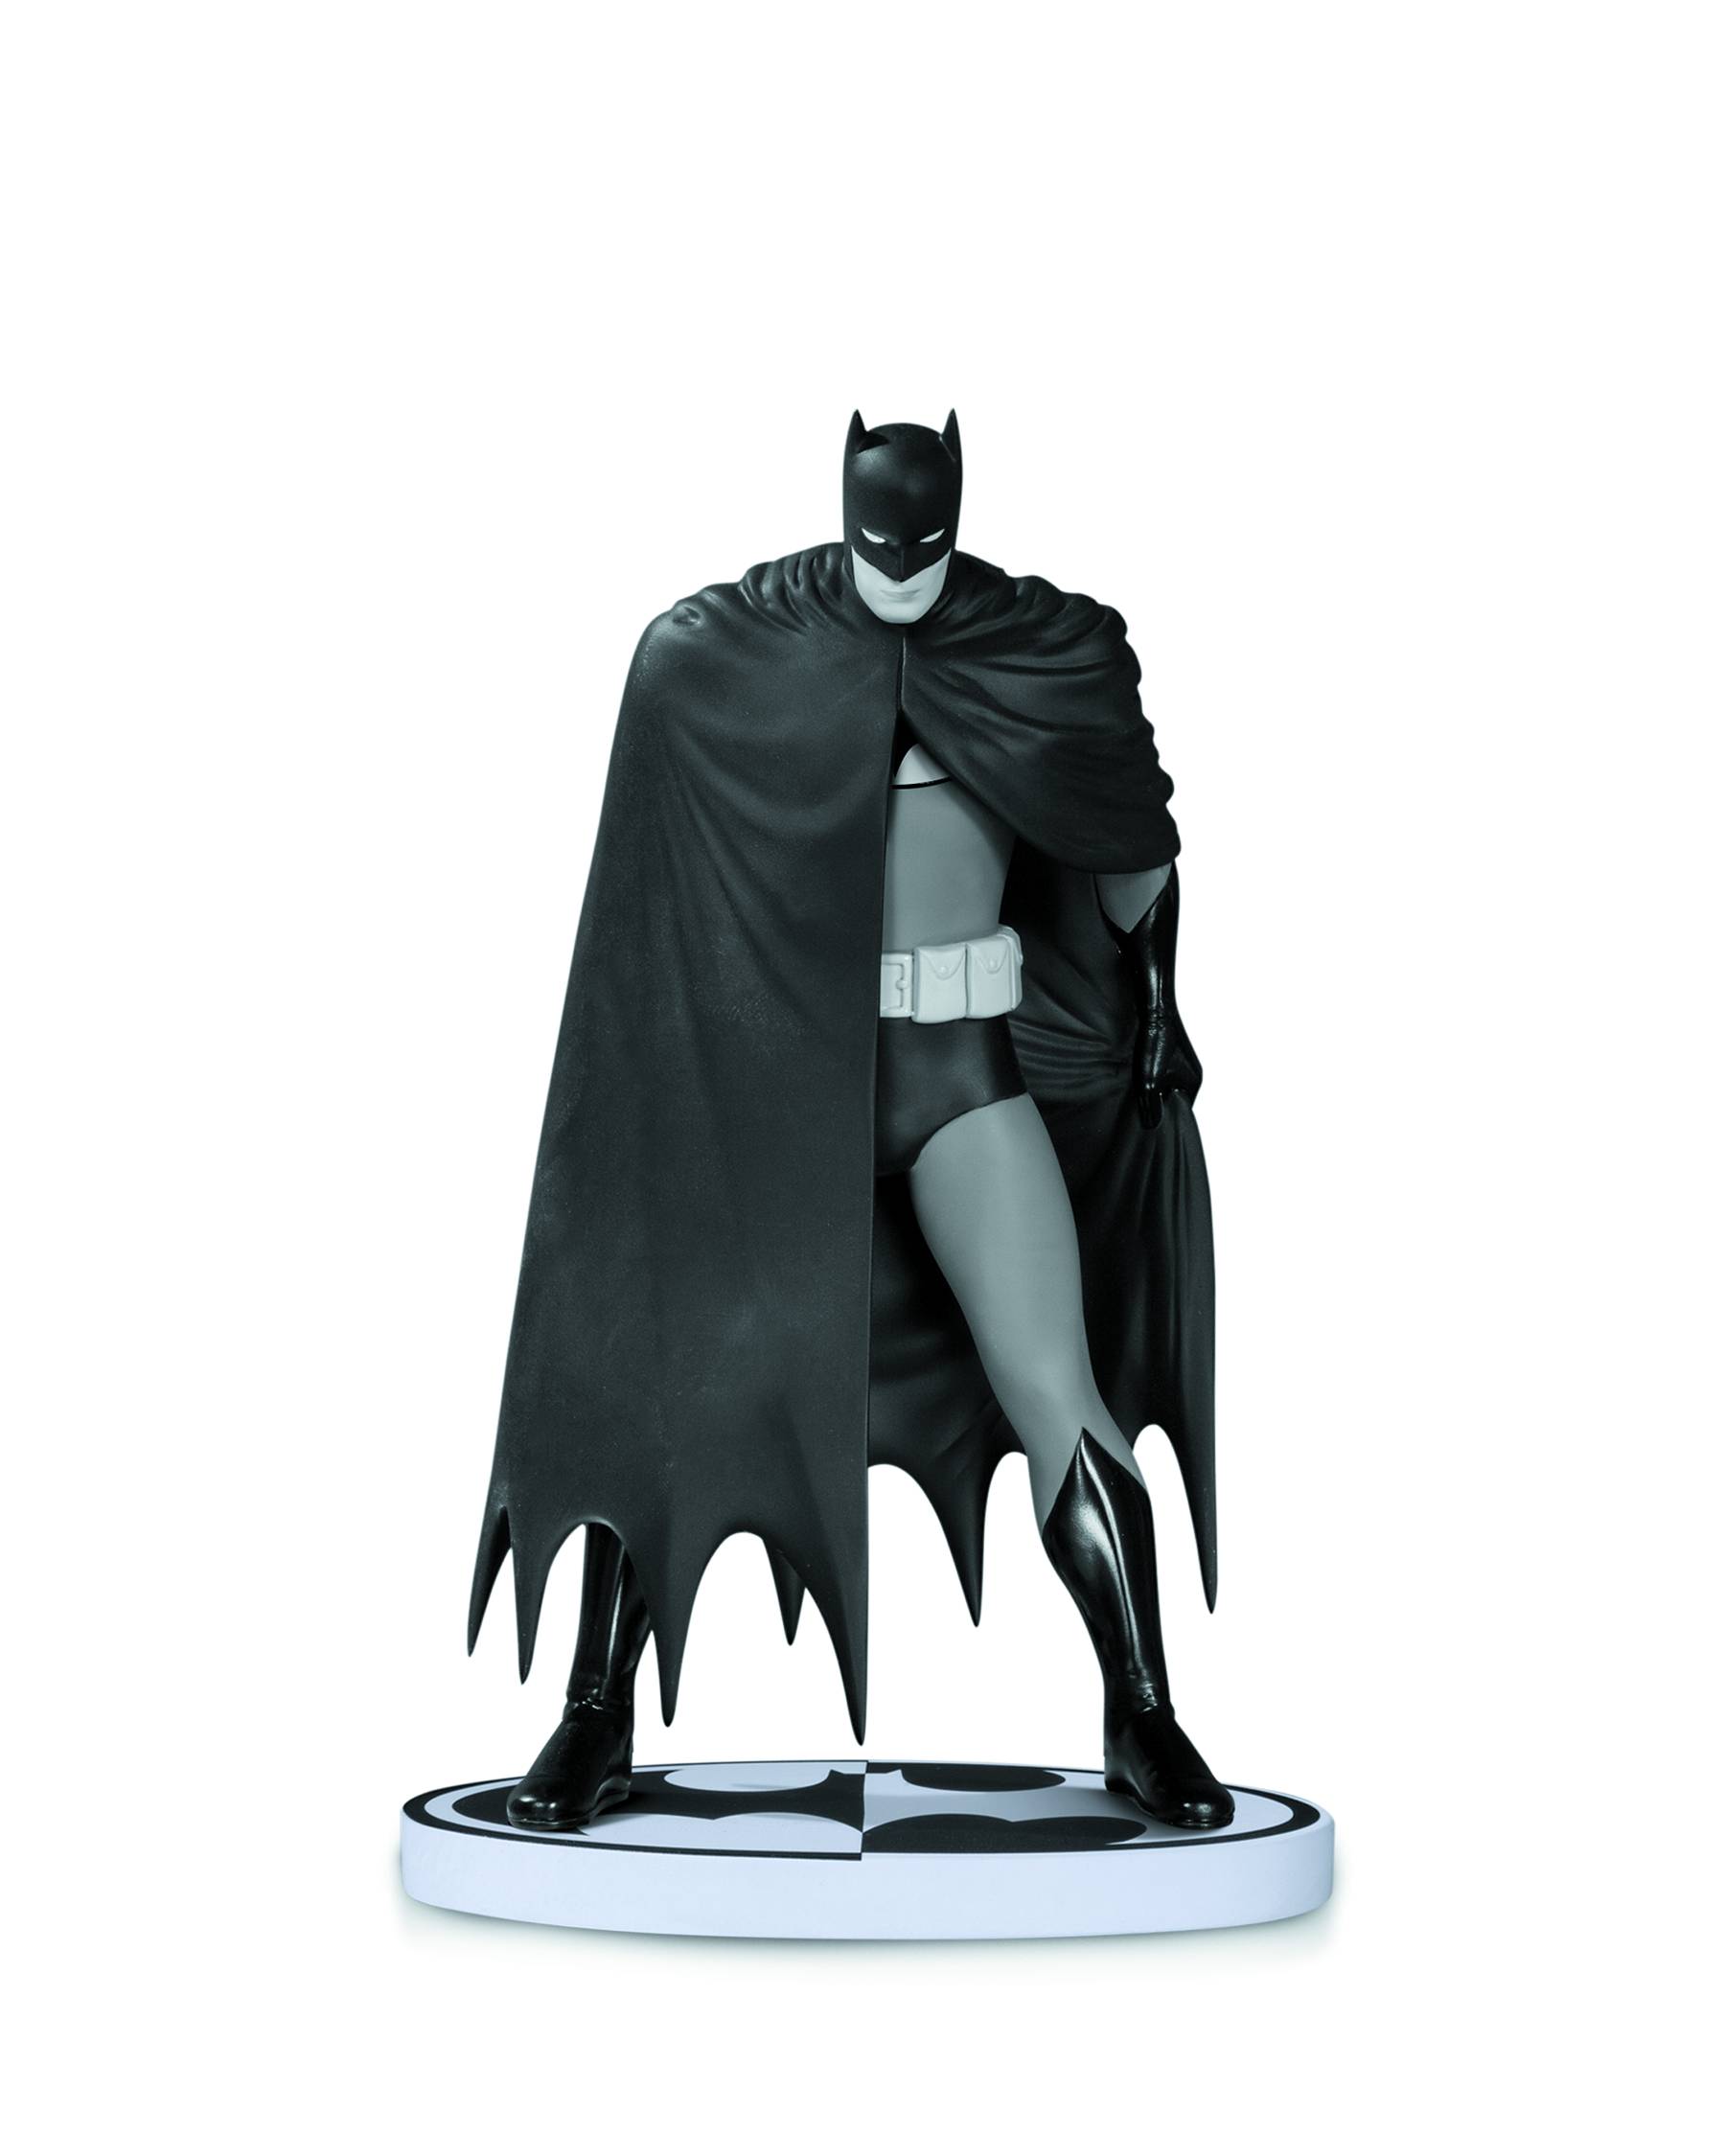 Batman Black & White Statue Dave Mazzucchelli 2nd Edition